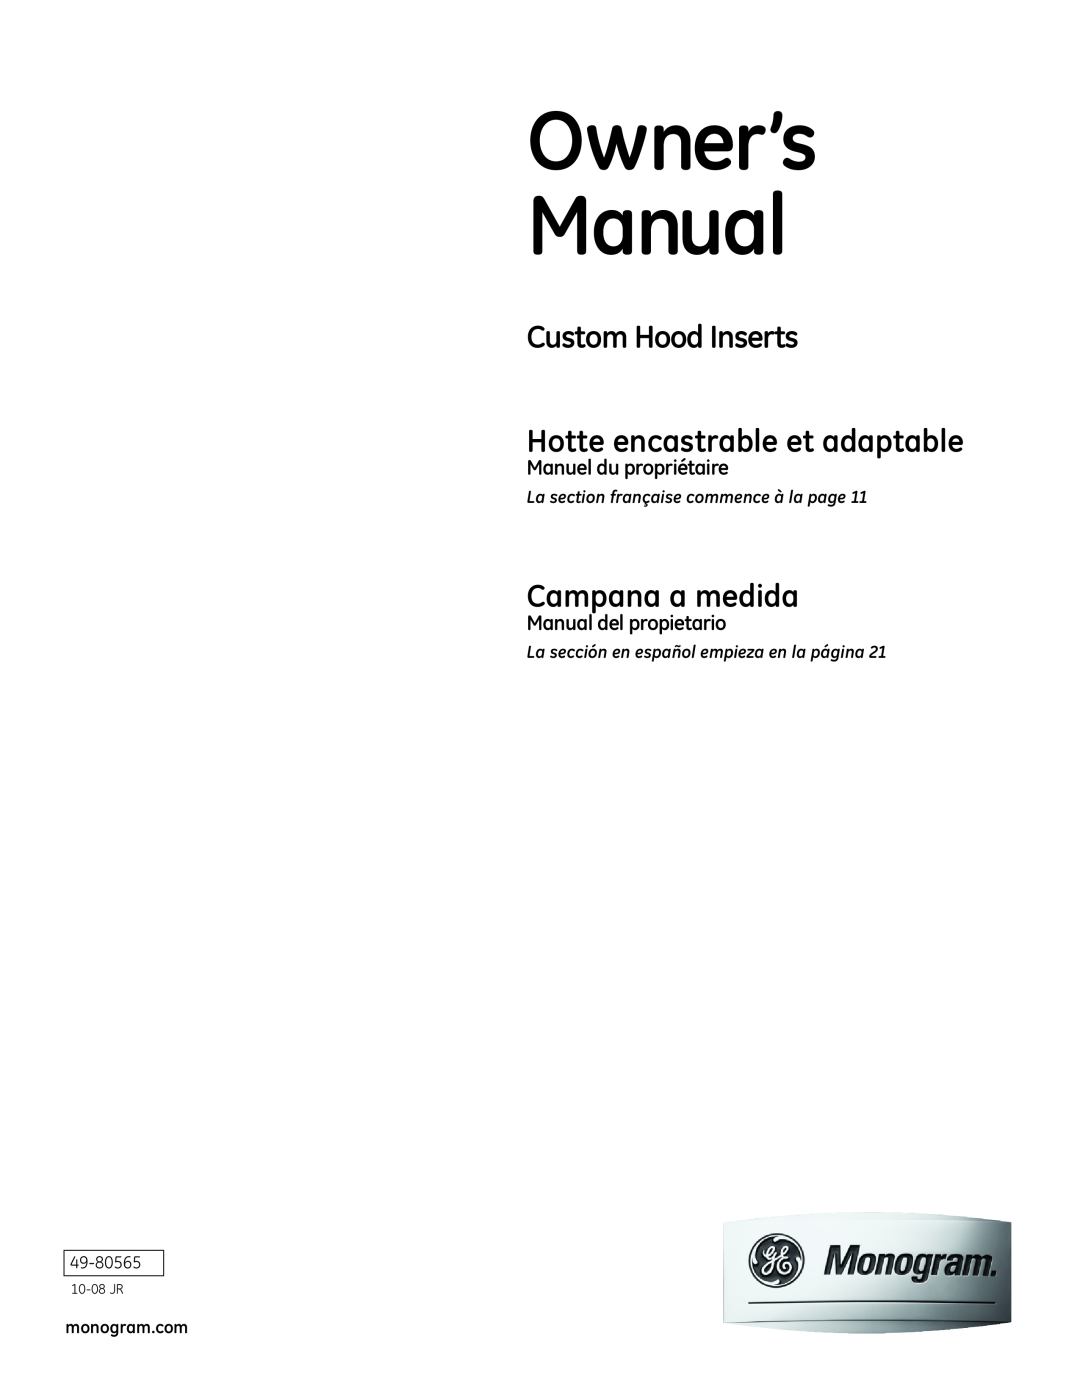 GE 49-80565 owner manual CustomHoodInserts Hotte encastrable et adaptable, Campana a medida, monogram.com, 10-08 JR 